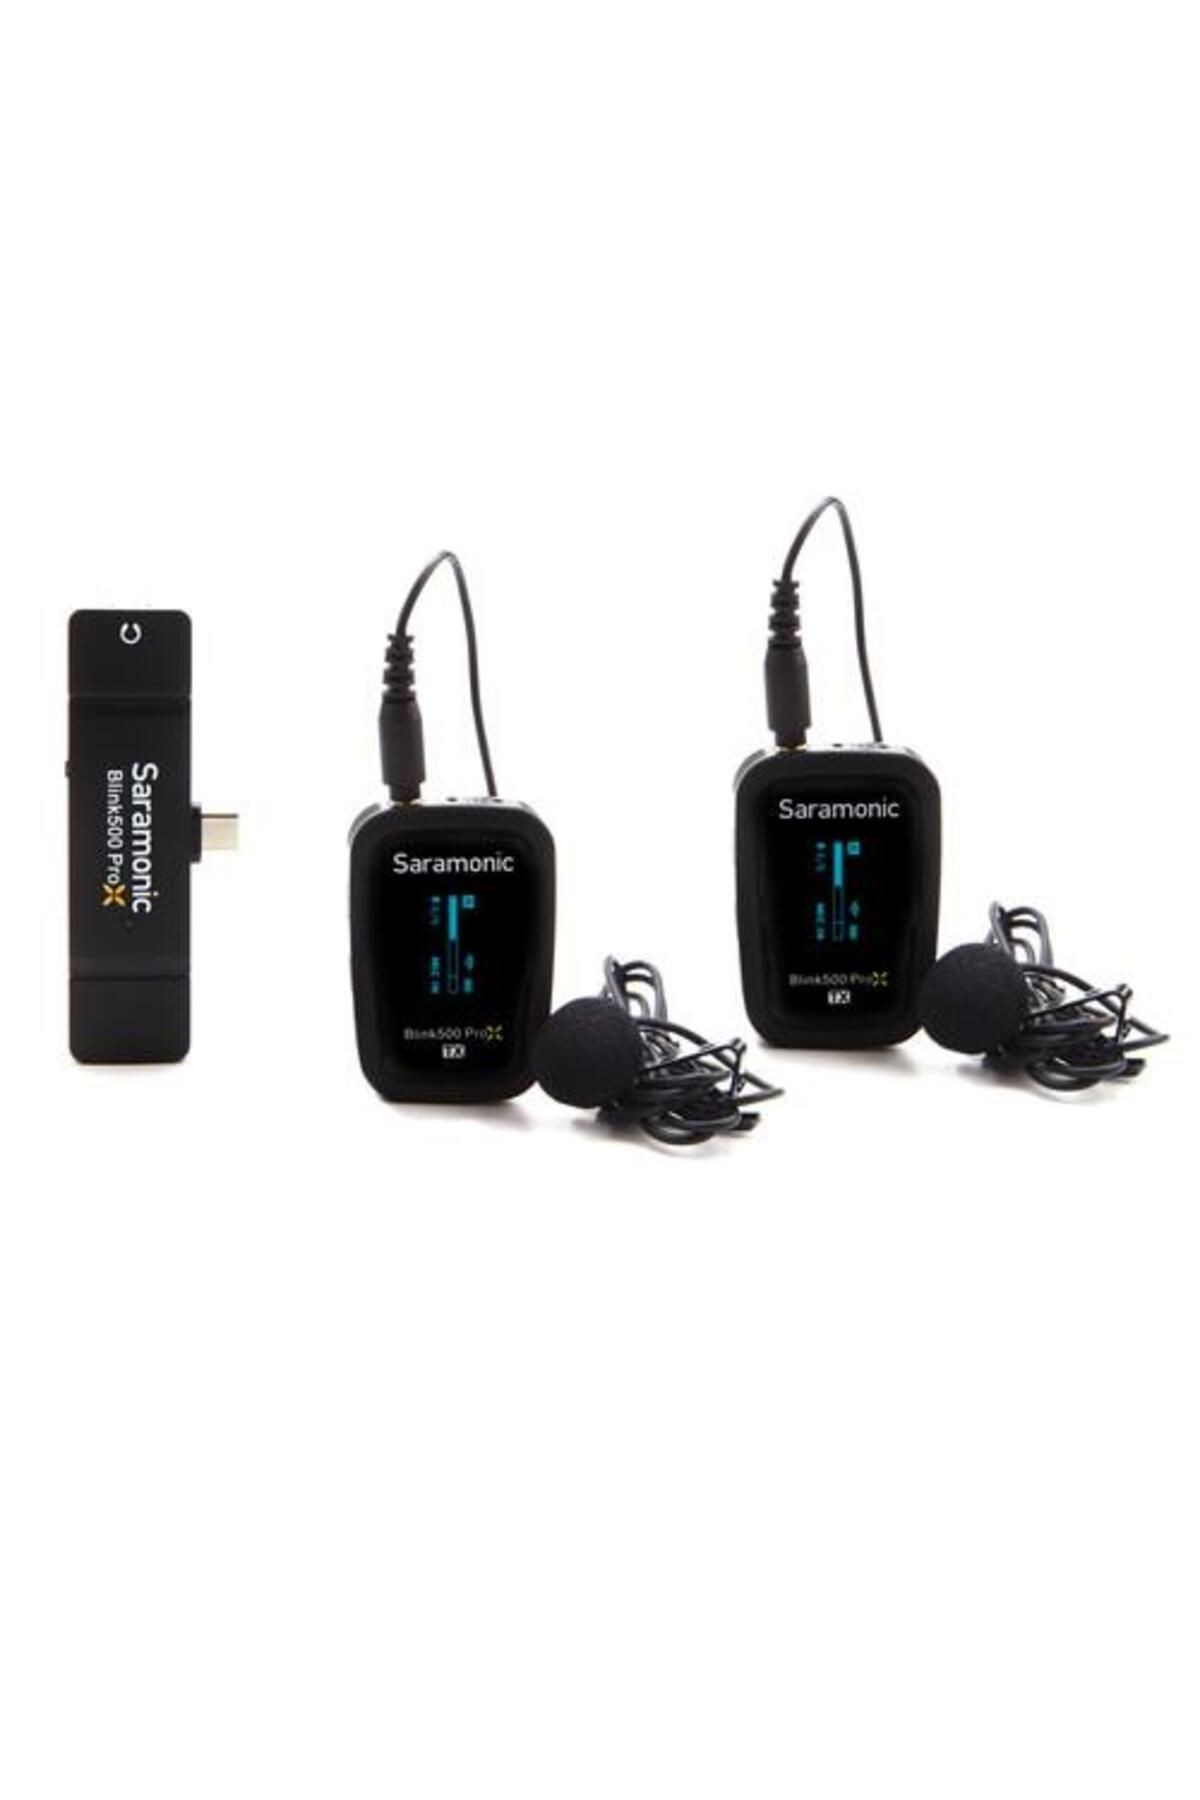 Saramonic Blink 500 Pro X B6 (Tx+Tx+Rx) Type-C için Kablosuz Yaka Mikrofonu Sistemi